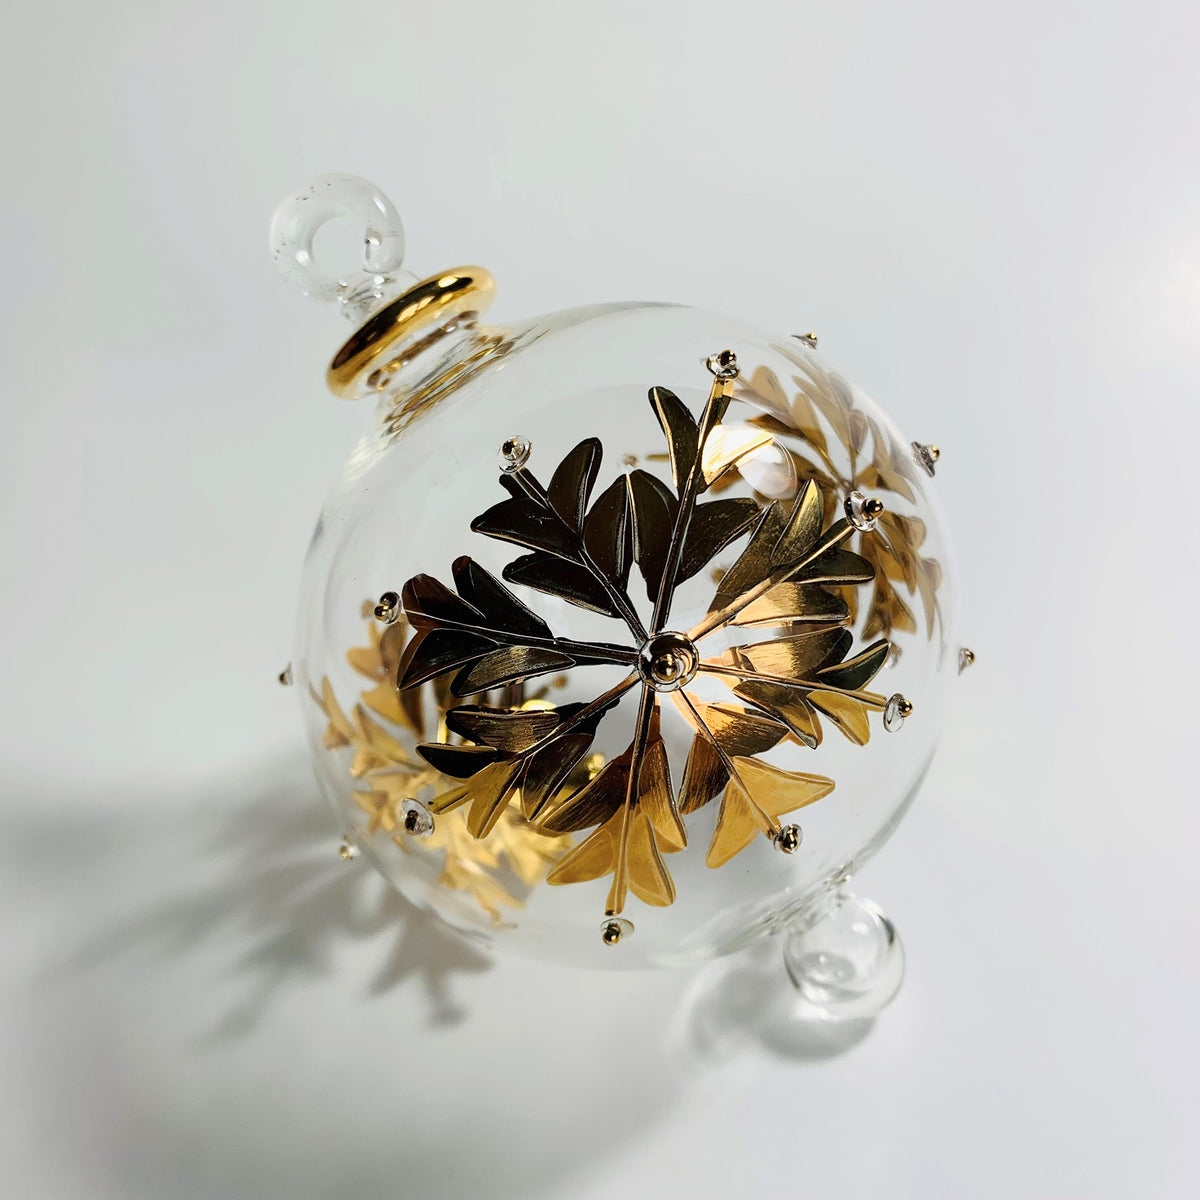 Blown Glass Ornament - Gold Snowflake